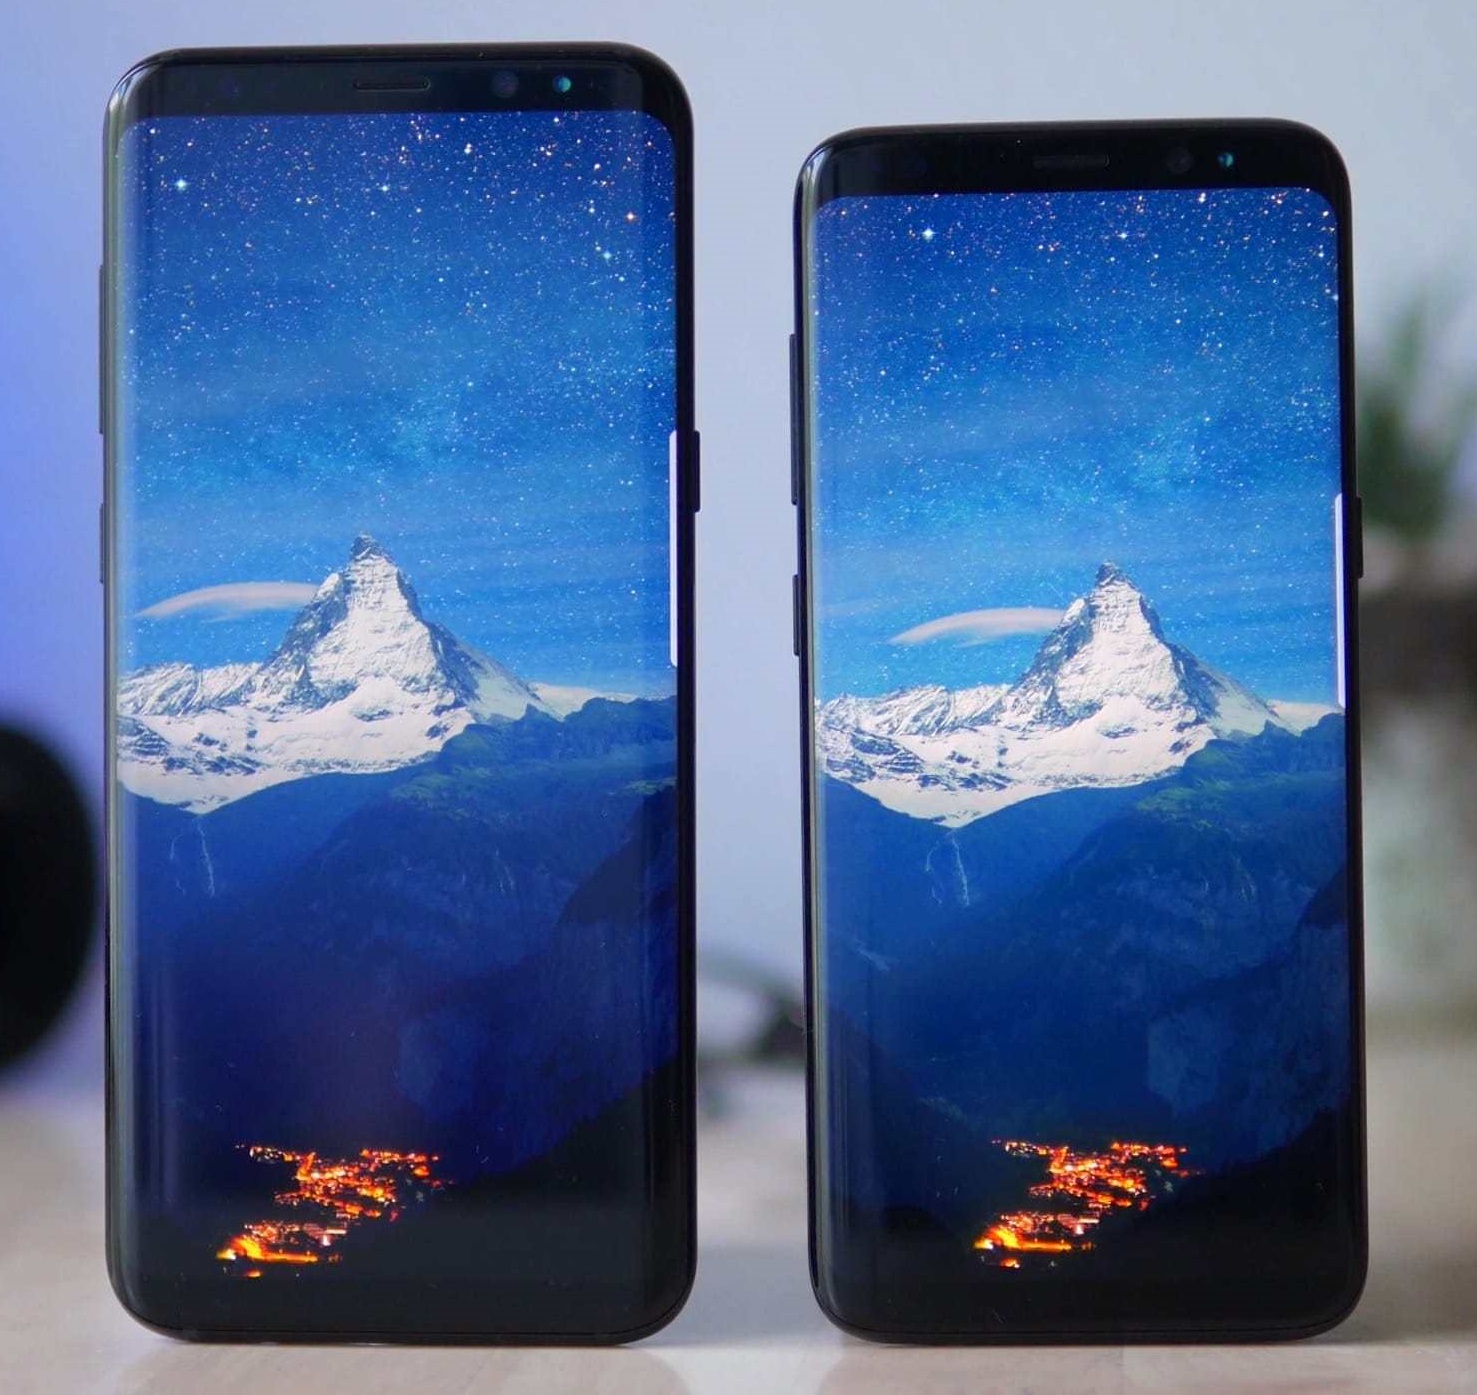 Цената без договор на Samsung Galaxy S9 е 1659 лева, а Galaxy S9+ струва 1849 лева.